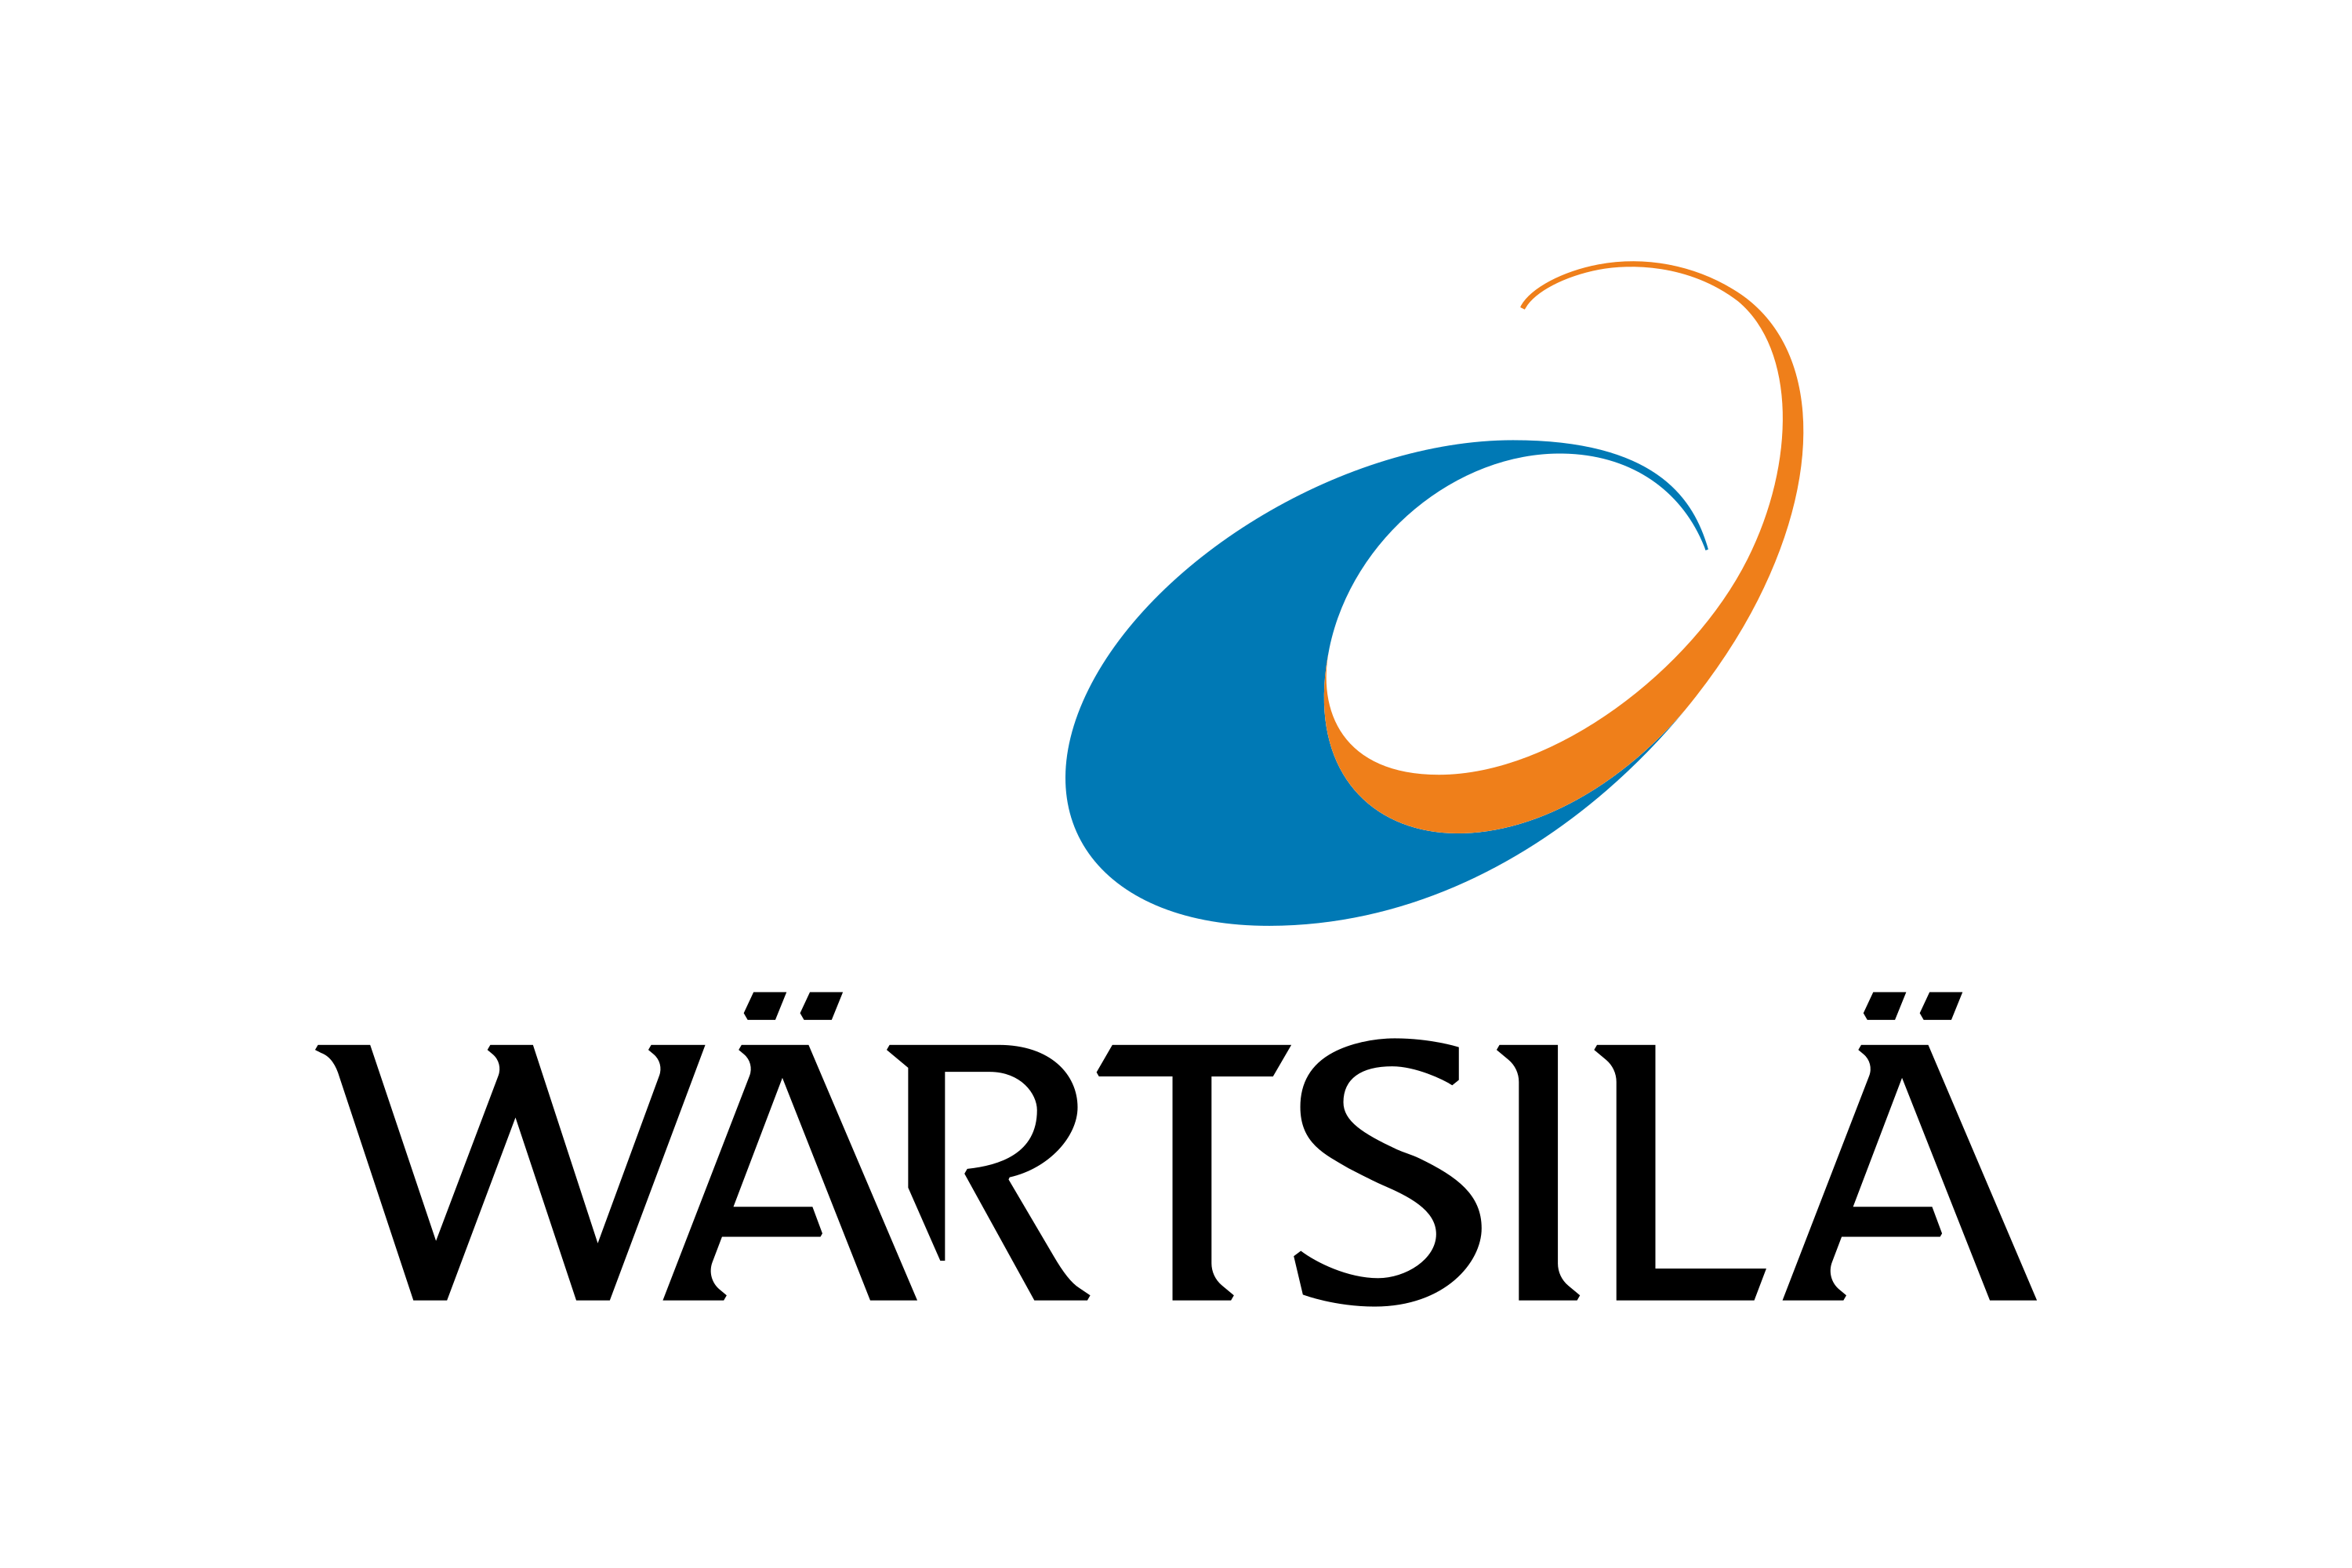 Download Wärtsilä Logo in SVG Vector or PNG File Format - Logo.wine